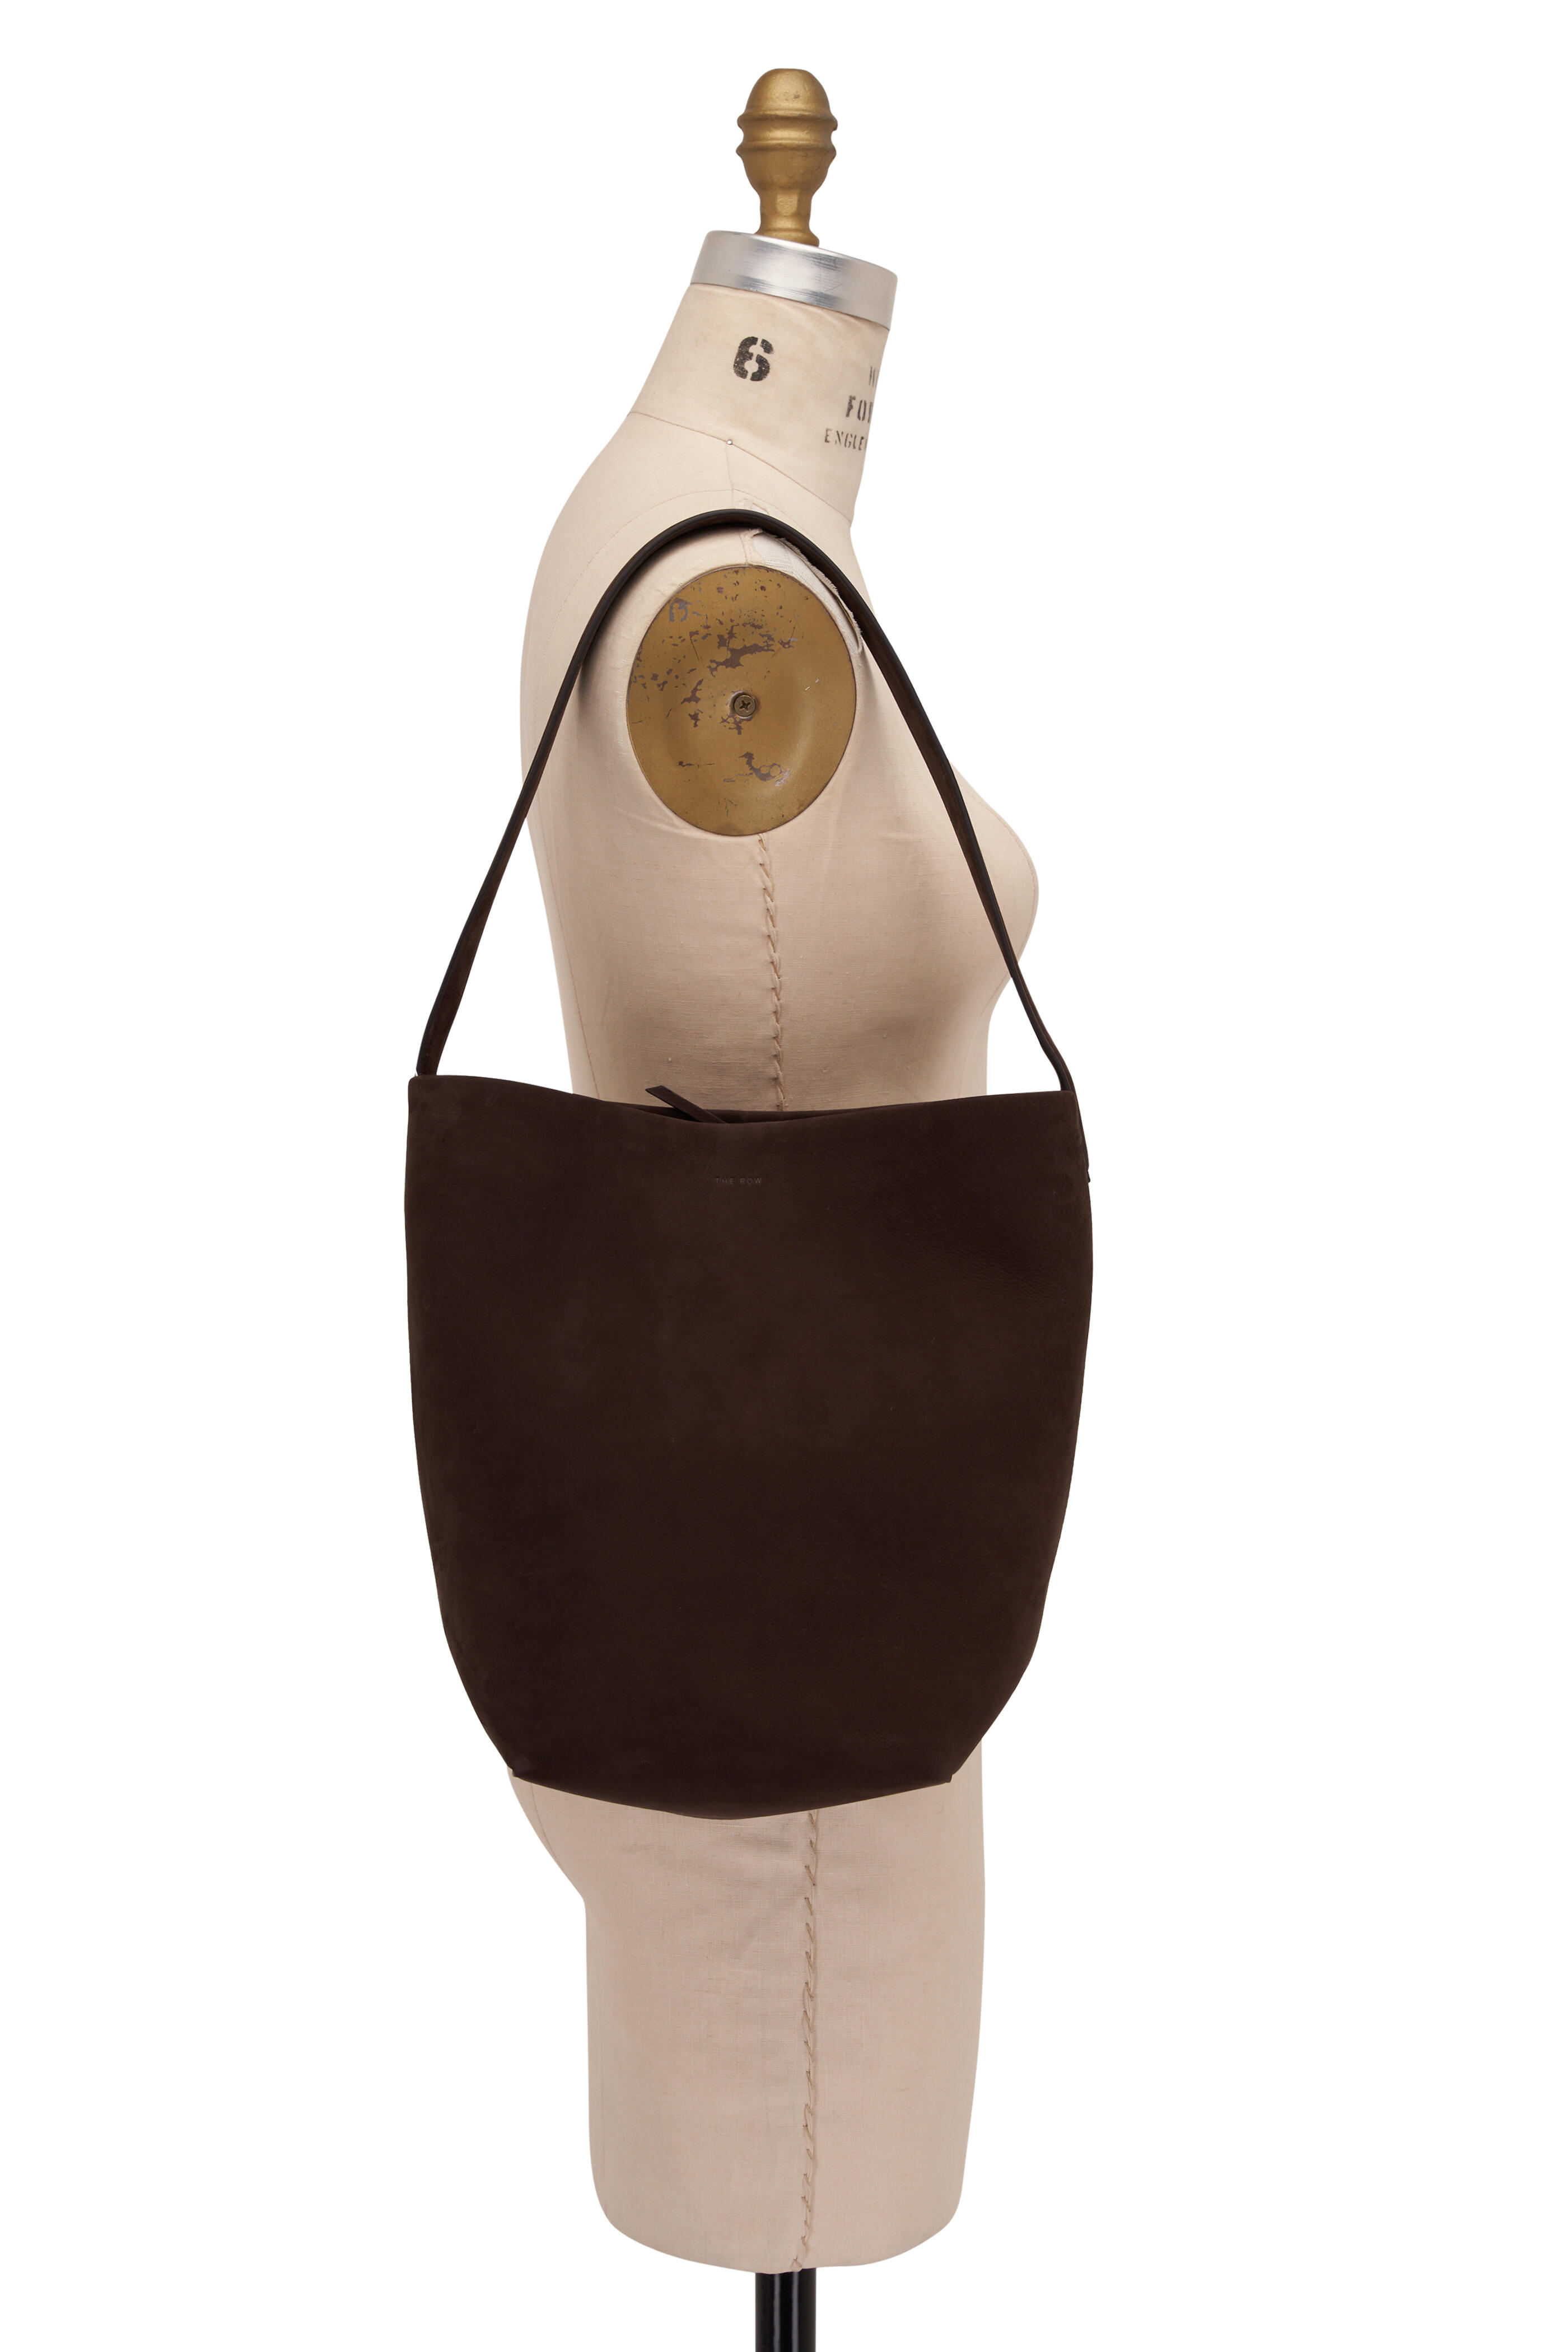 THE ROW Shopping Bags Women, Medium N/S Park Tote bag Ivory